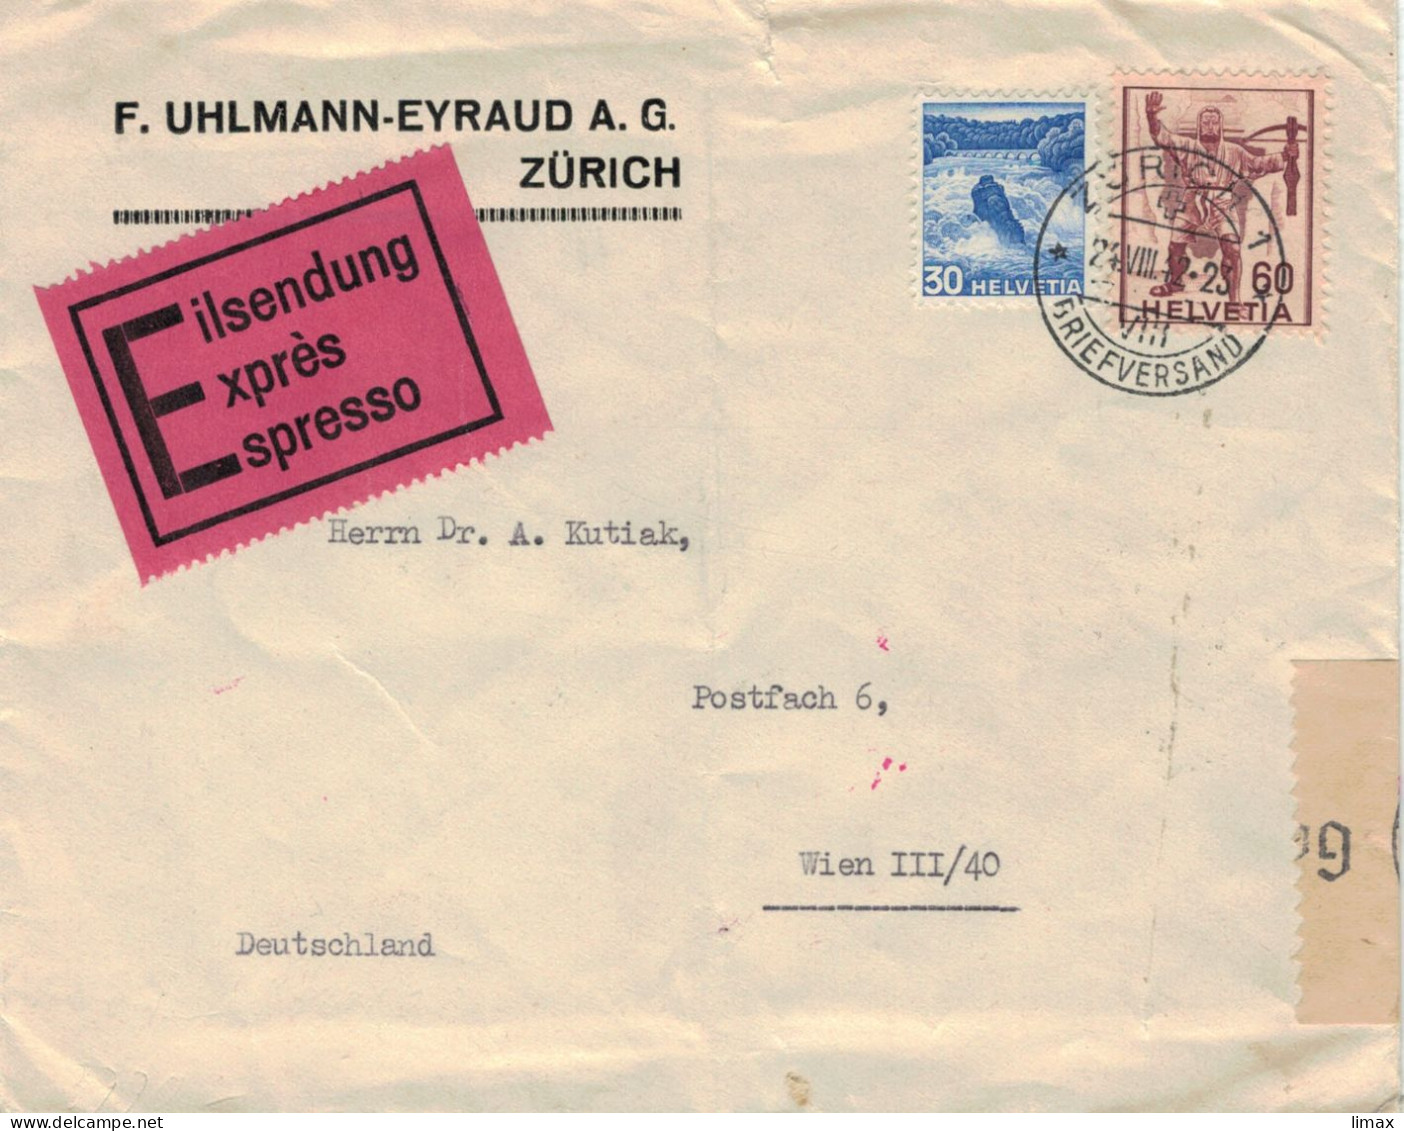 Uhlmann-Eyraud Zürich Briefversand 1942 > Dr. Kutiak Wien - Zensur OKW - Rheinfall Armbrust-Schütze Eilsendung - Storia Postale